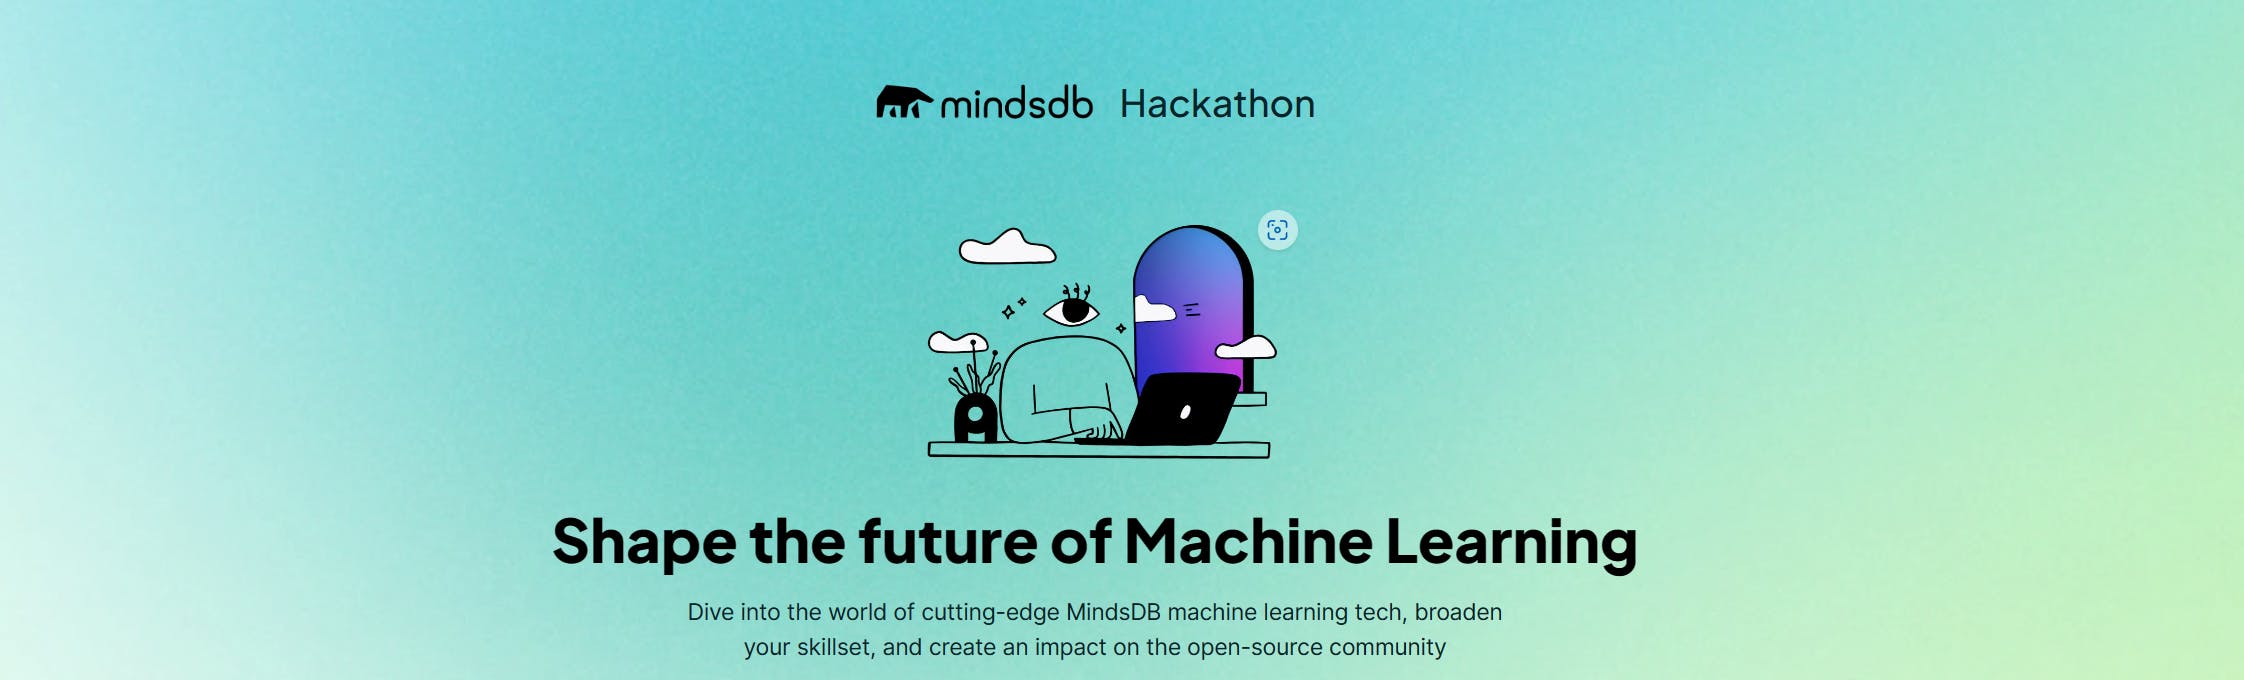 MindsDB Hashnode Hackathon